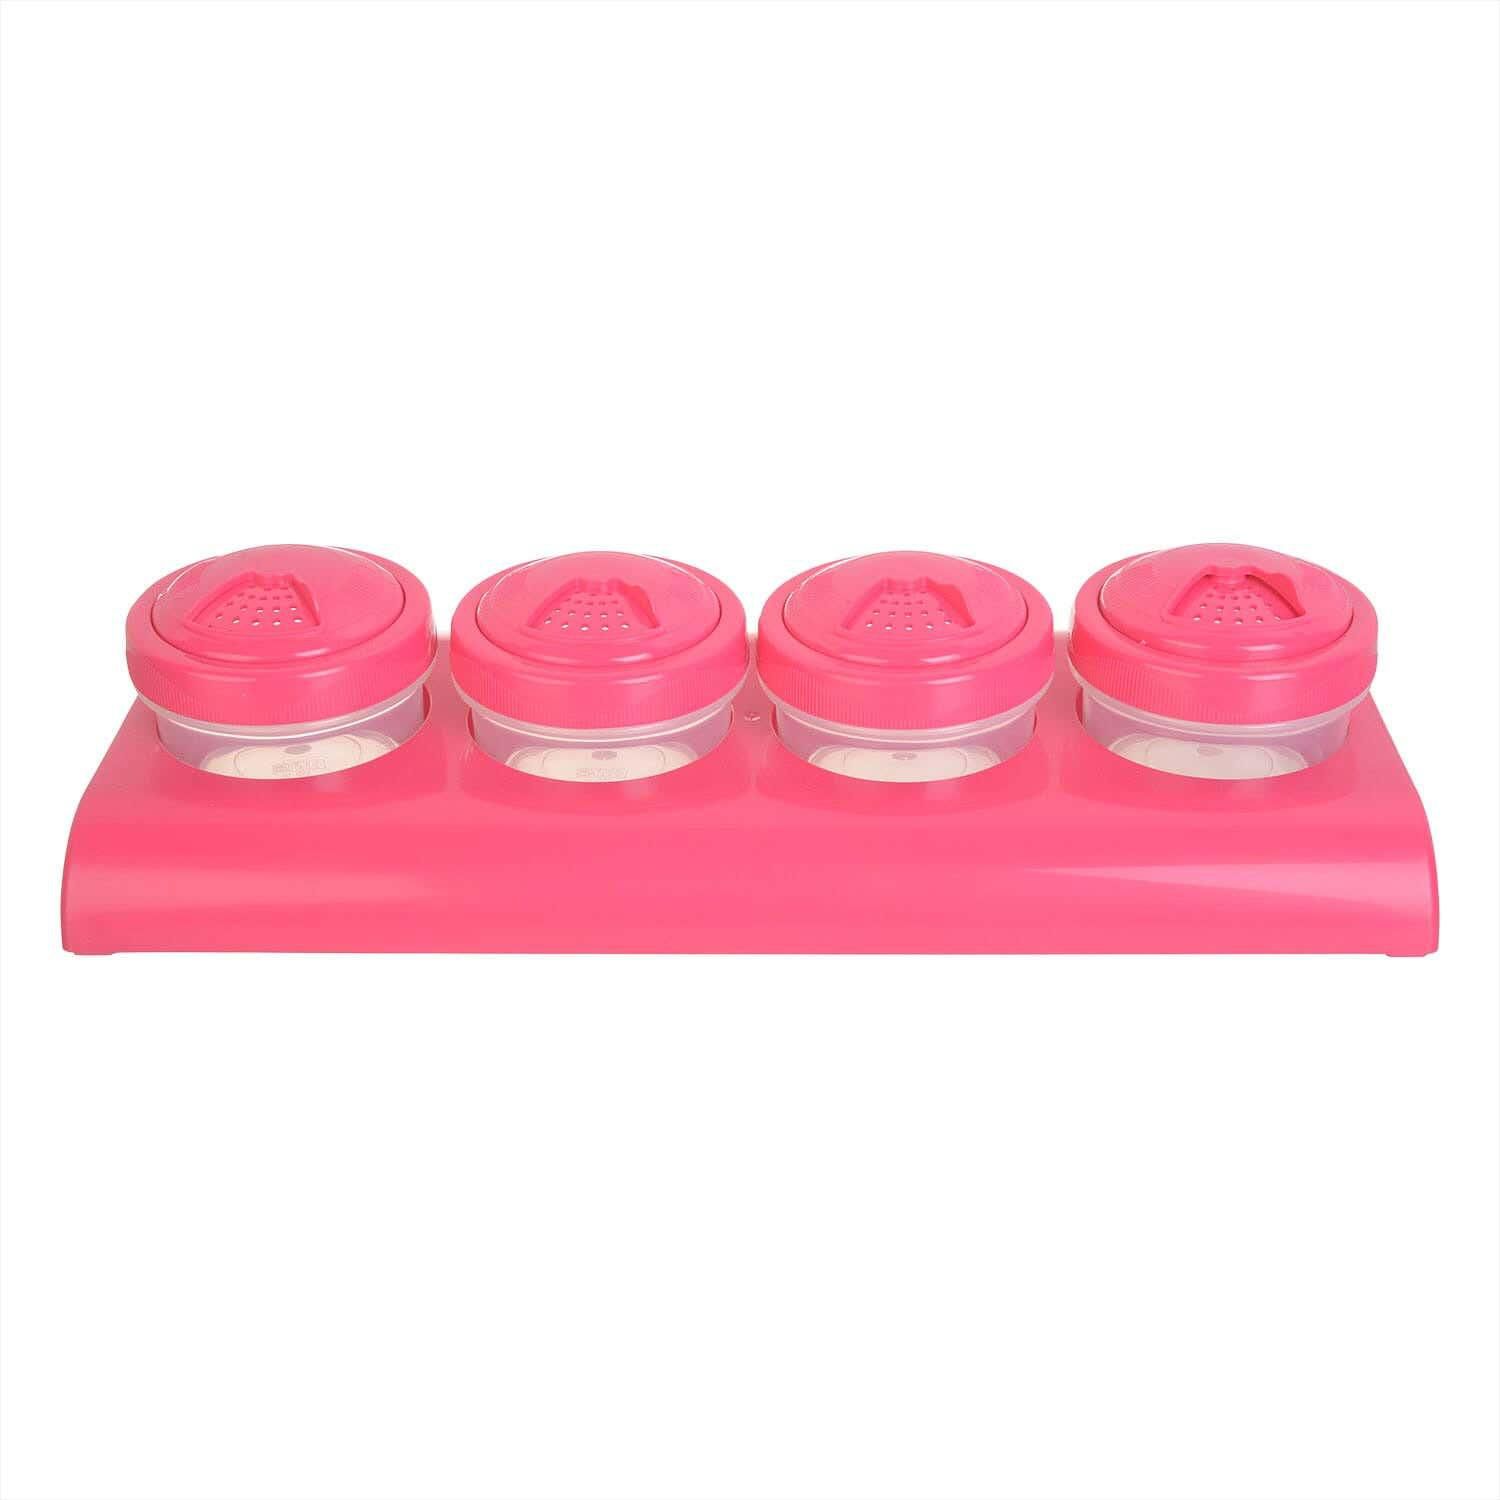 Get Pro Blast Plastic Spice Jar Set, 4 Pieces, 150 ml with best offers | Raneen.com